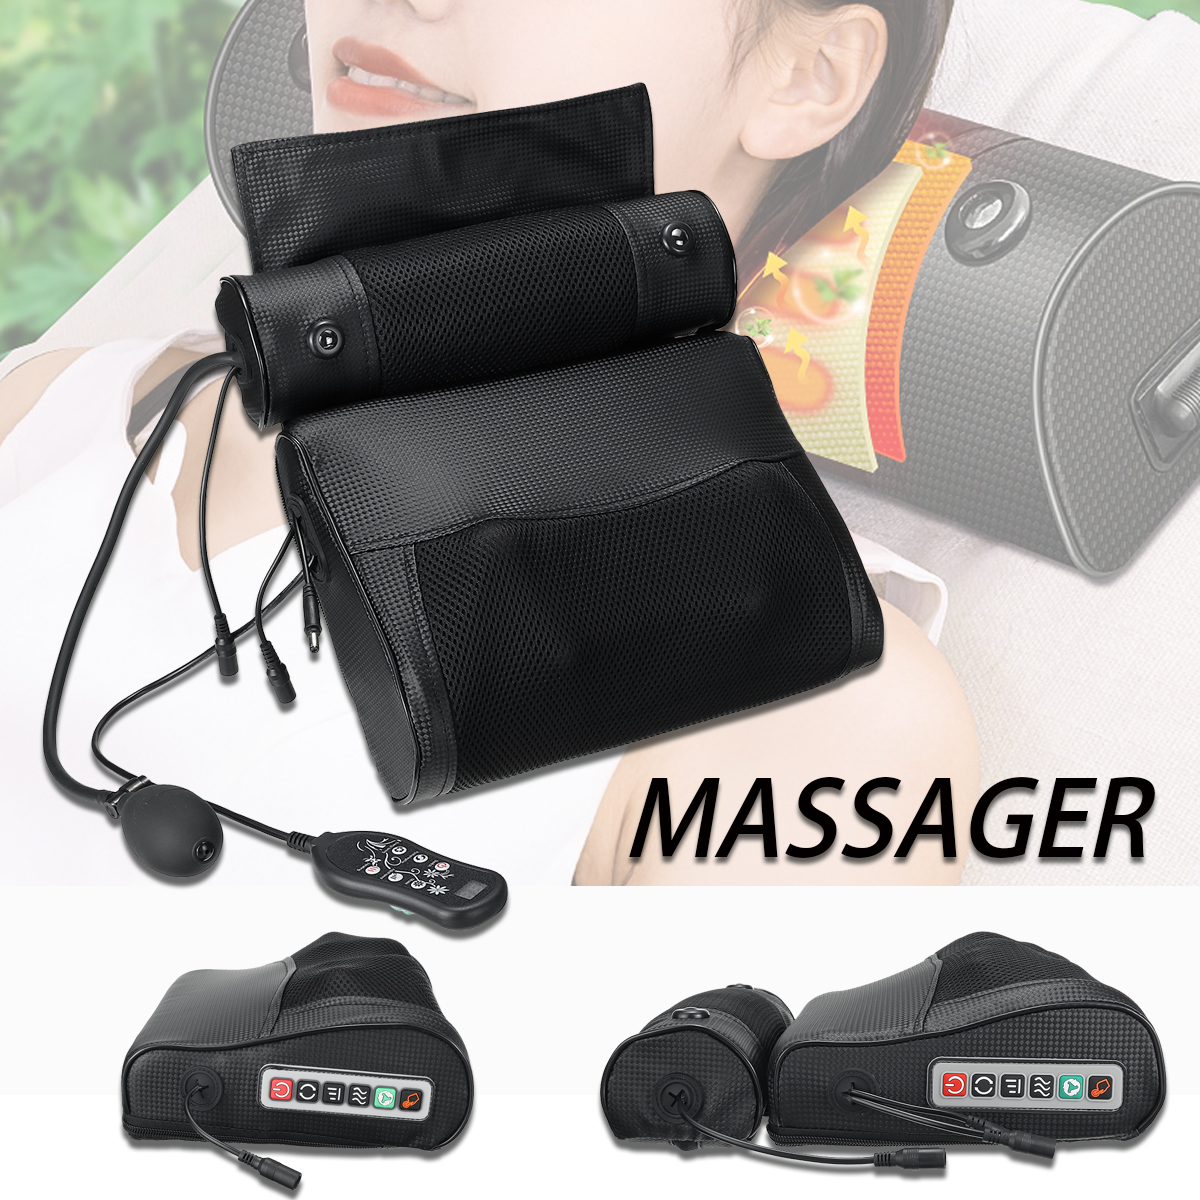 Intelligent-Overheating-Protection-Cervical-Spine-Massager-Detachable-Multi-stage-Airbag-Neck-Massag-1932593-1